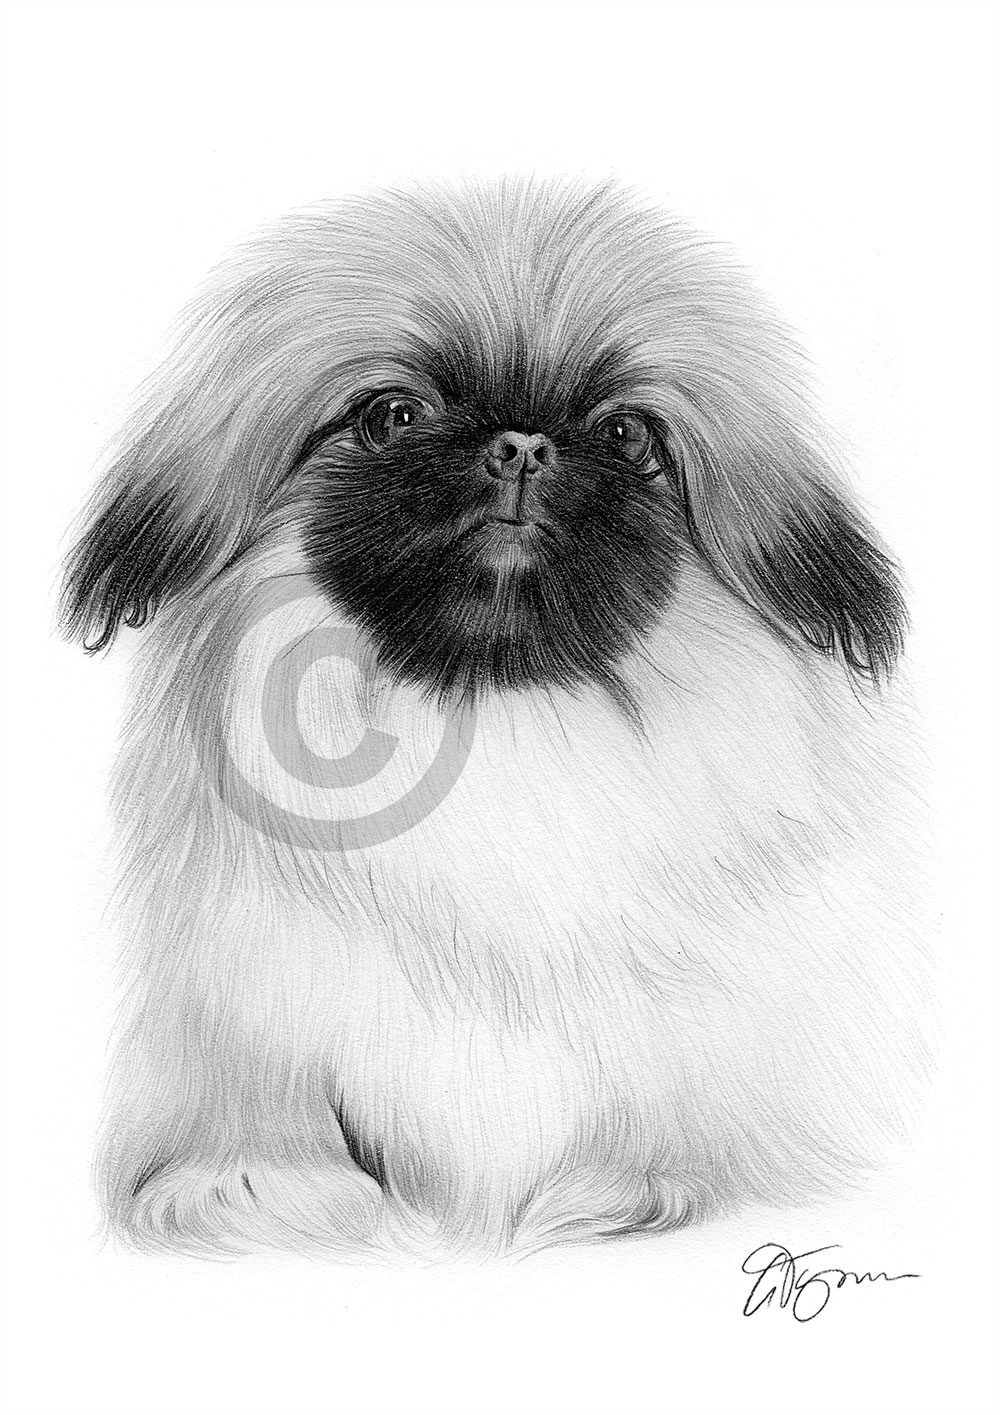 Pencil drawing of a Pekingnese puppy by artist Gary Tymon